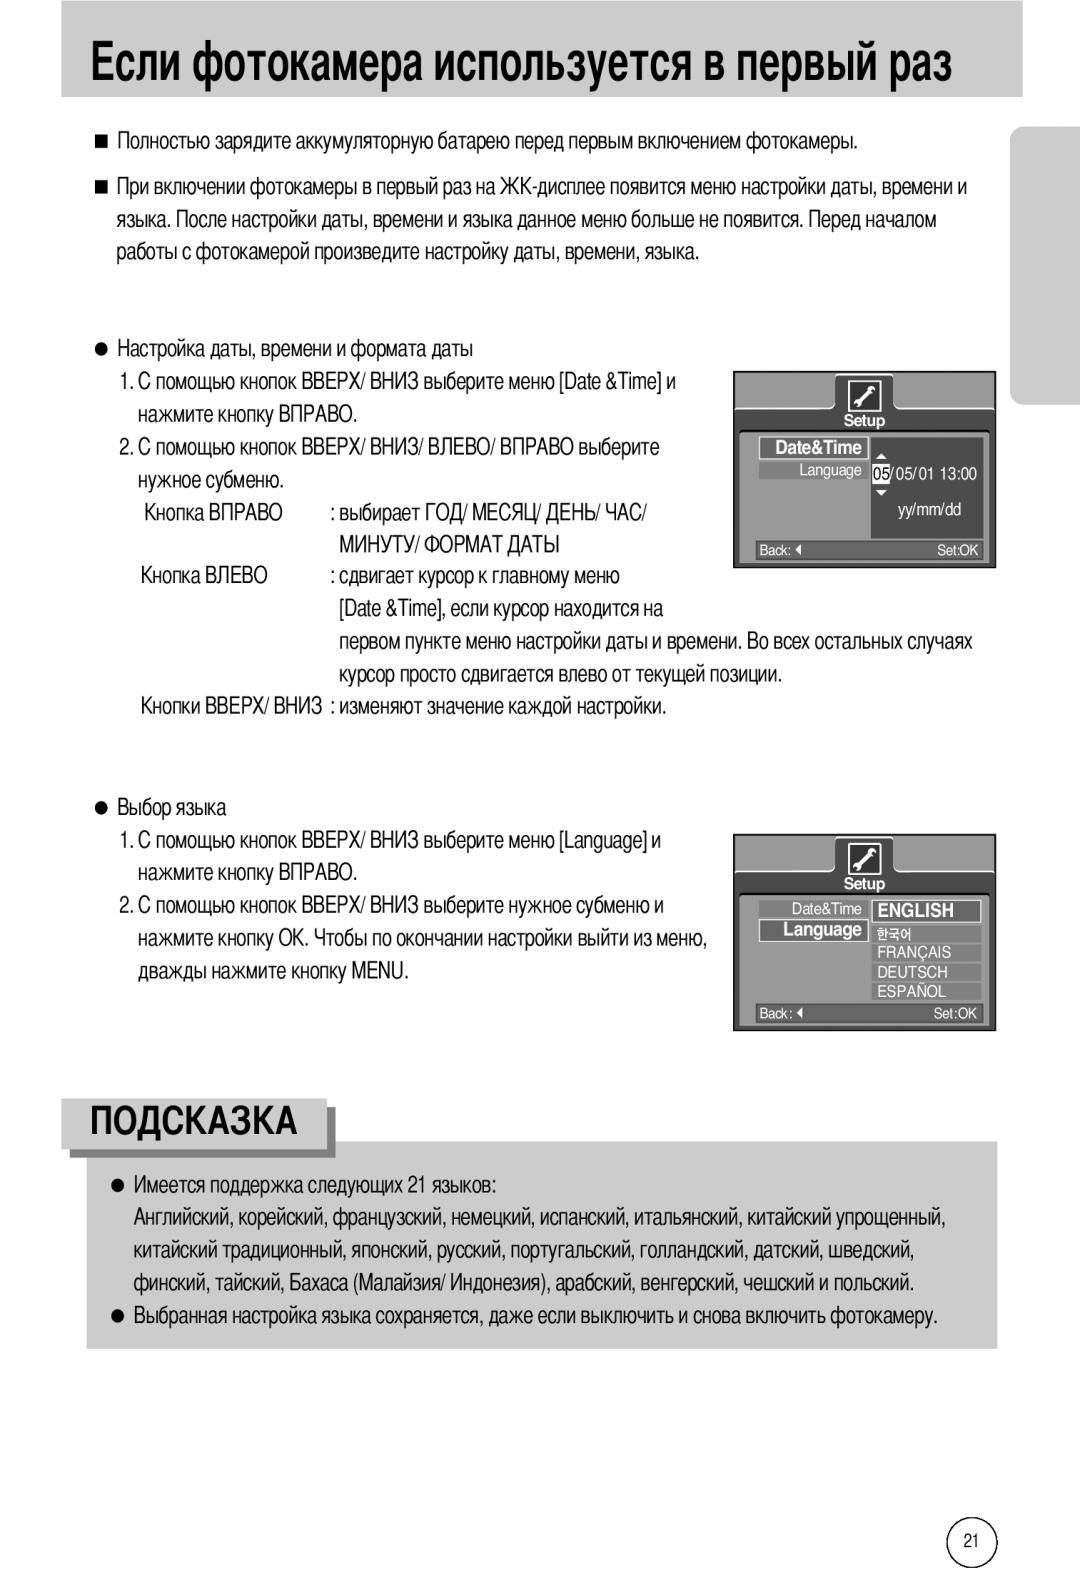 Samsung EC-I50ZZSBB/AS, EC-I50ZZBBA/FR, EC-I50ZZRBA/FR, EC-I50ZZSBA/AS токамера используется в первый раз, English, Language 